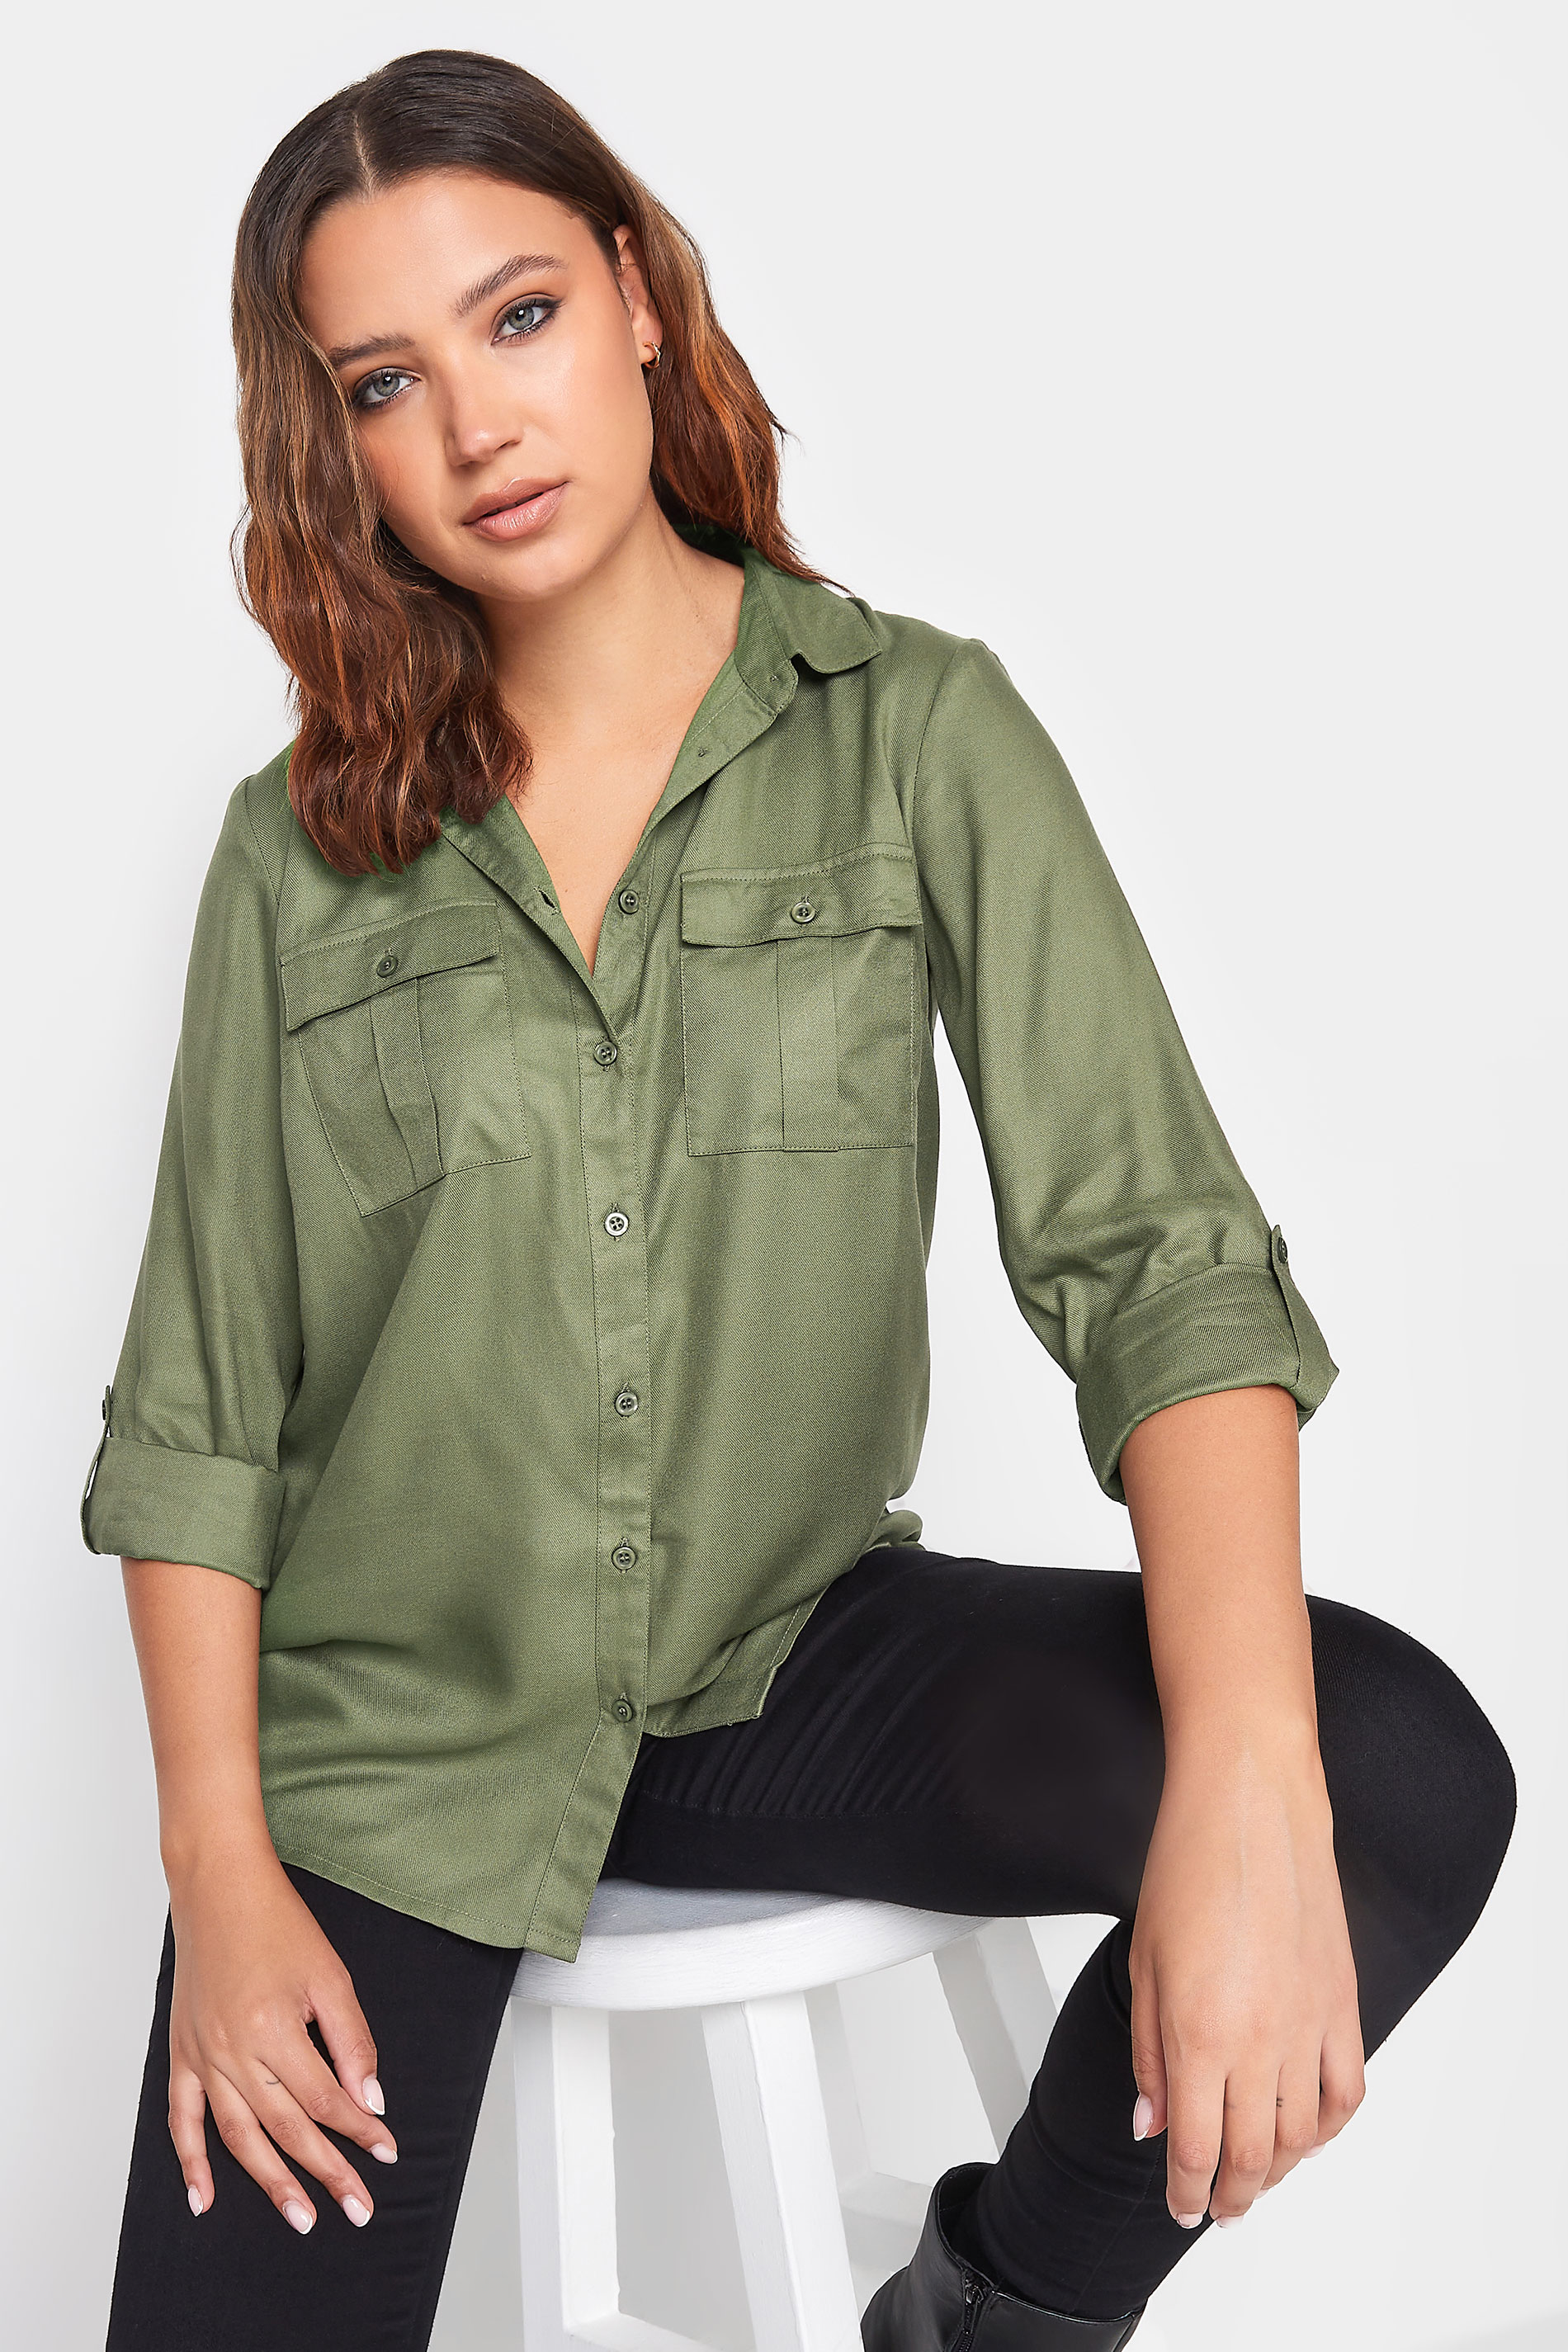 LTS Tall Khaki Green Utility Shirt | Long Tall Sally  1